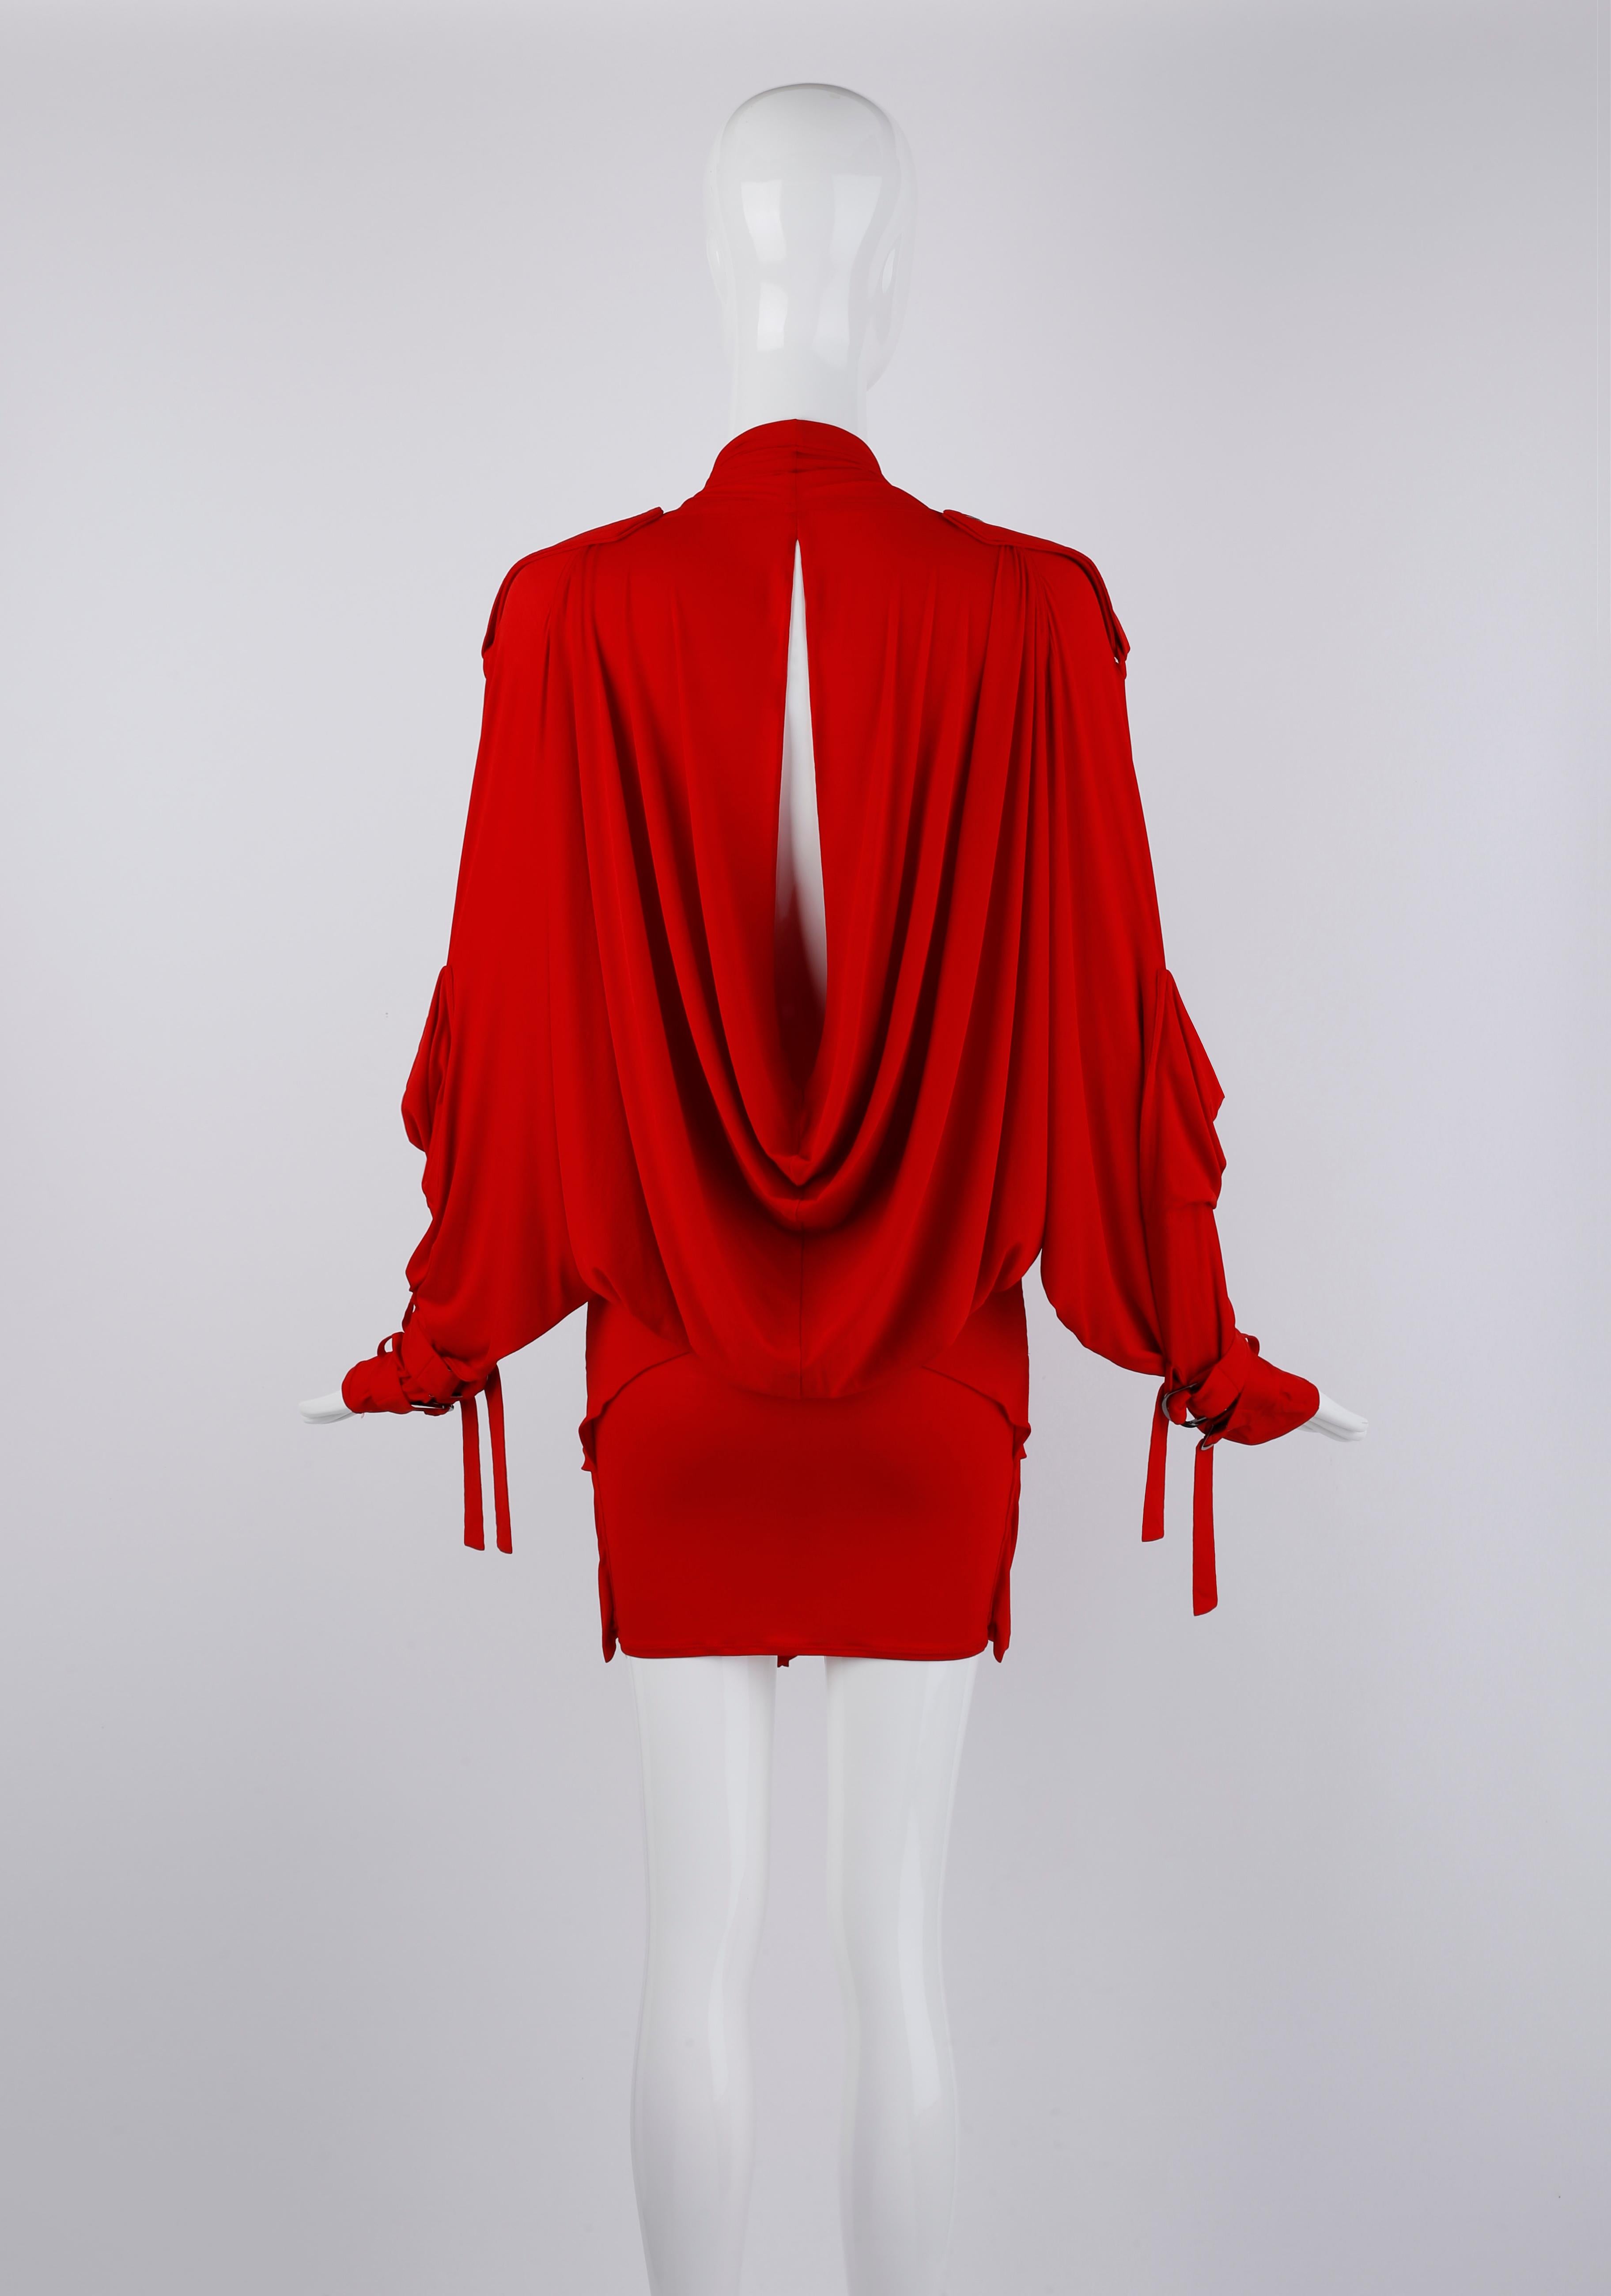 Christian Dior John Galliano S/S 2003 Red Plunge Draped Pocket Mini Dress For Sale 3